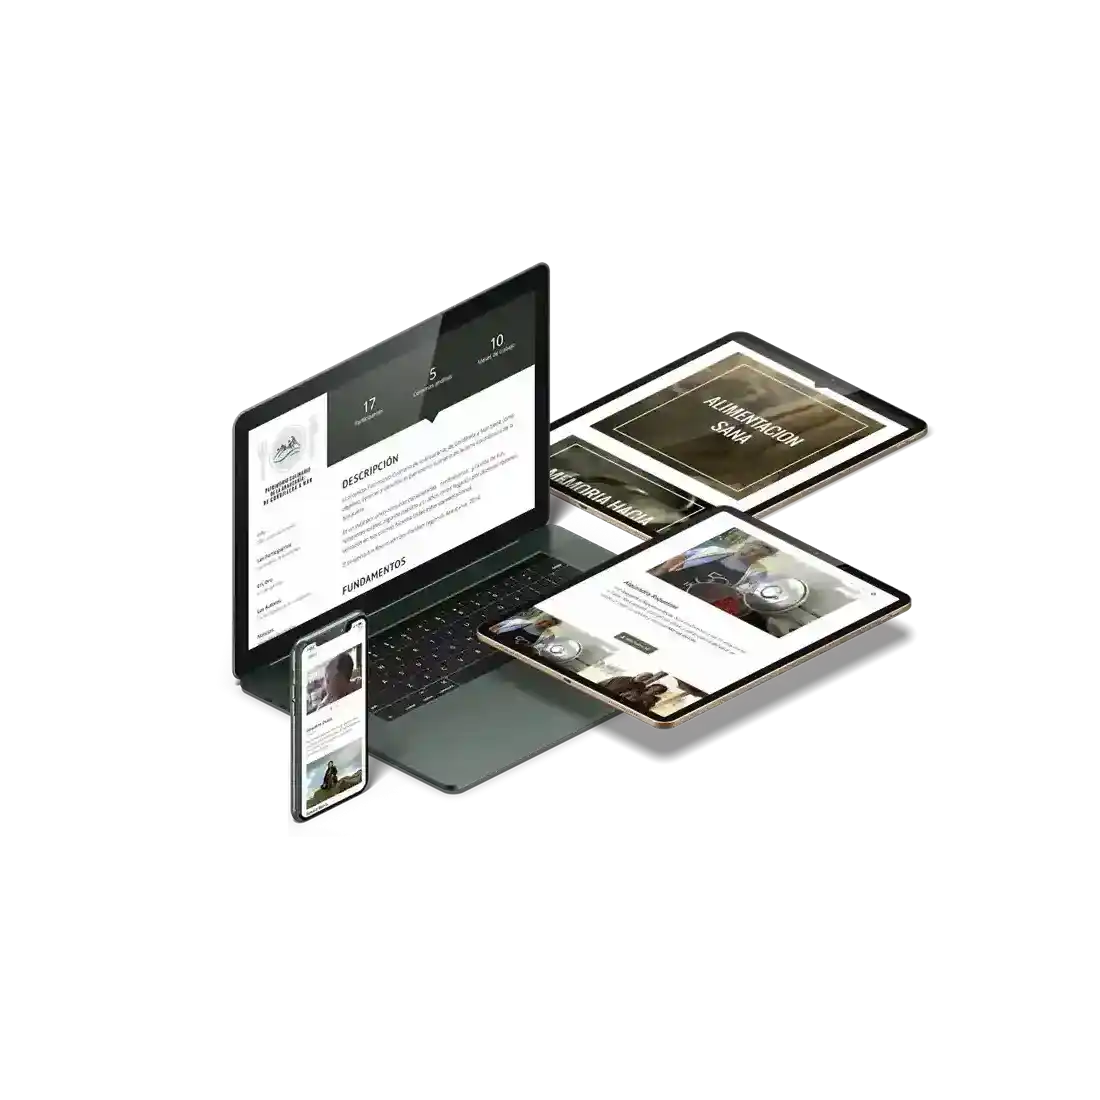 Several views of website shown on desktop, mobile and tablet.